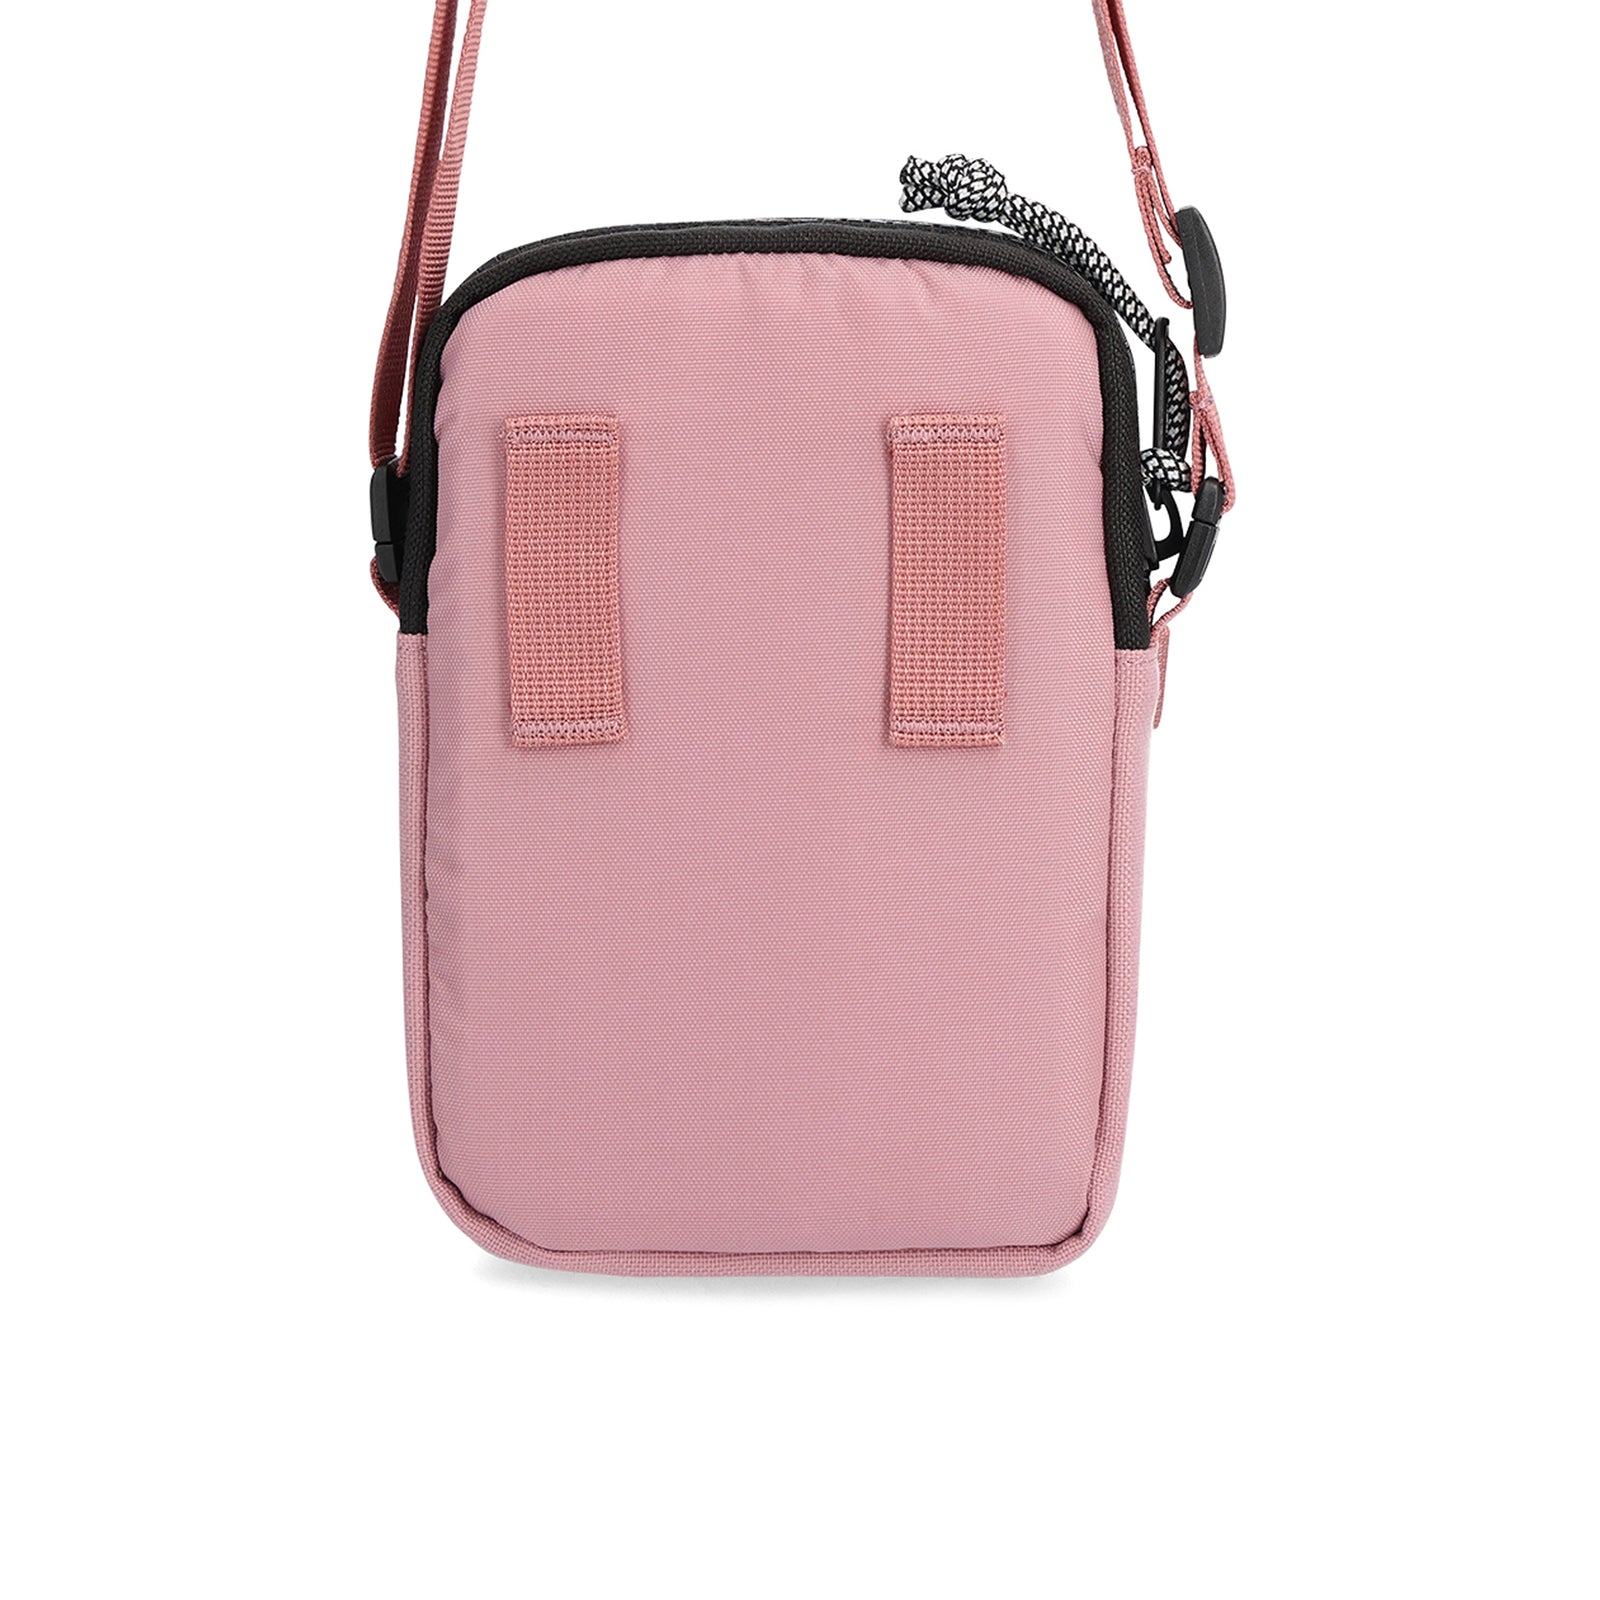 Back View of Topo Designs Mini Shoulder Bag in "Rose"